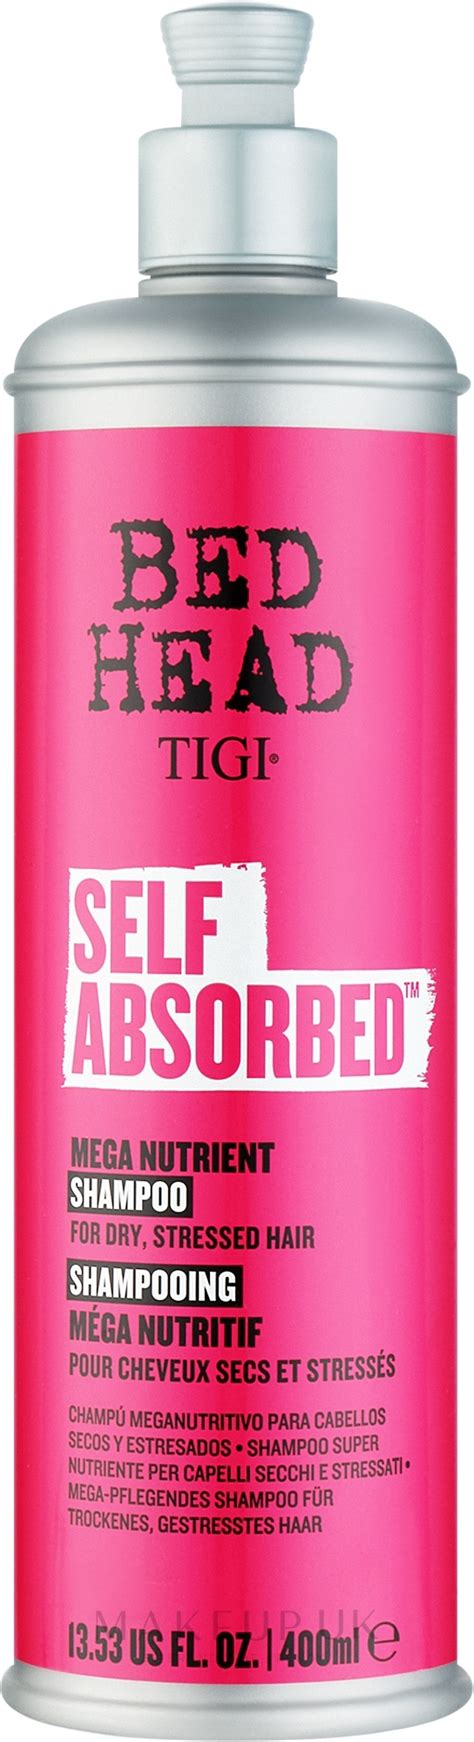 Tigi Bed Head Self Absorbed Mega Nutrient Shampoo Vitamin Shampoo